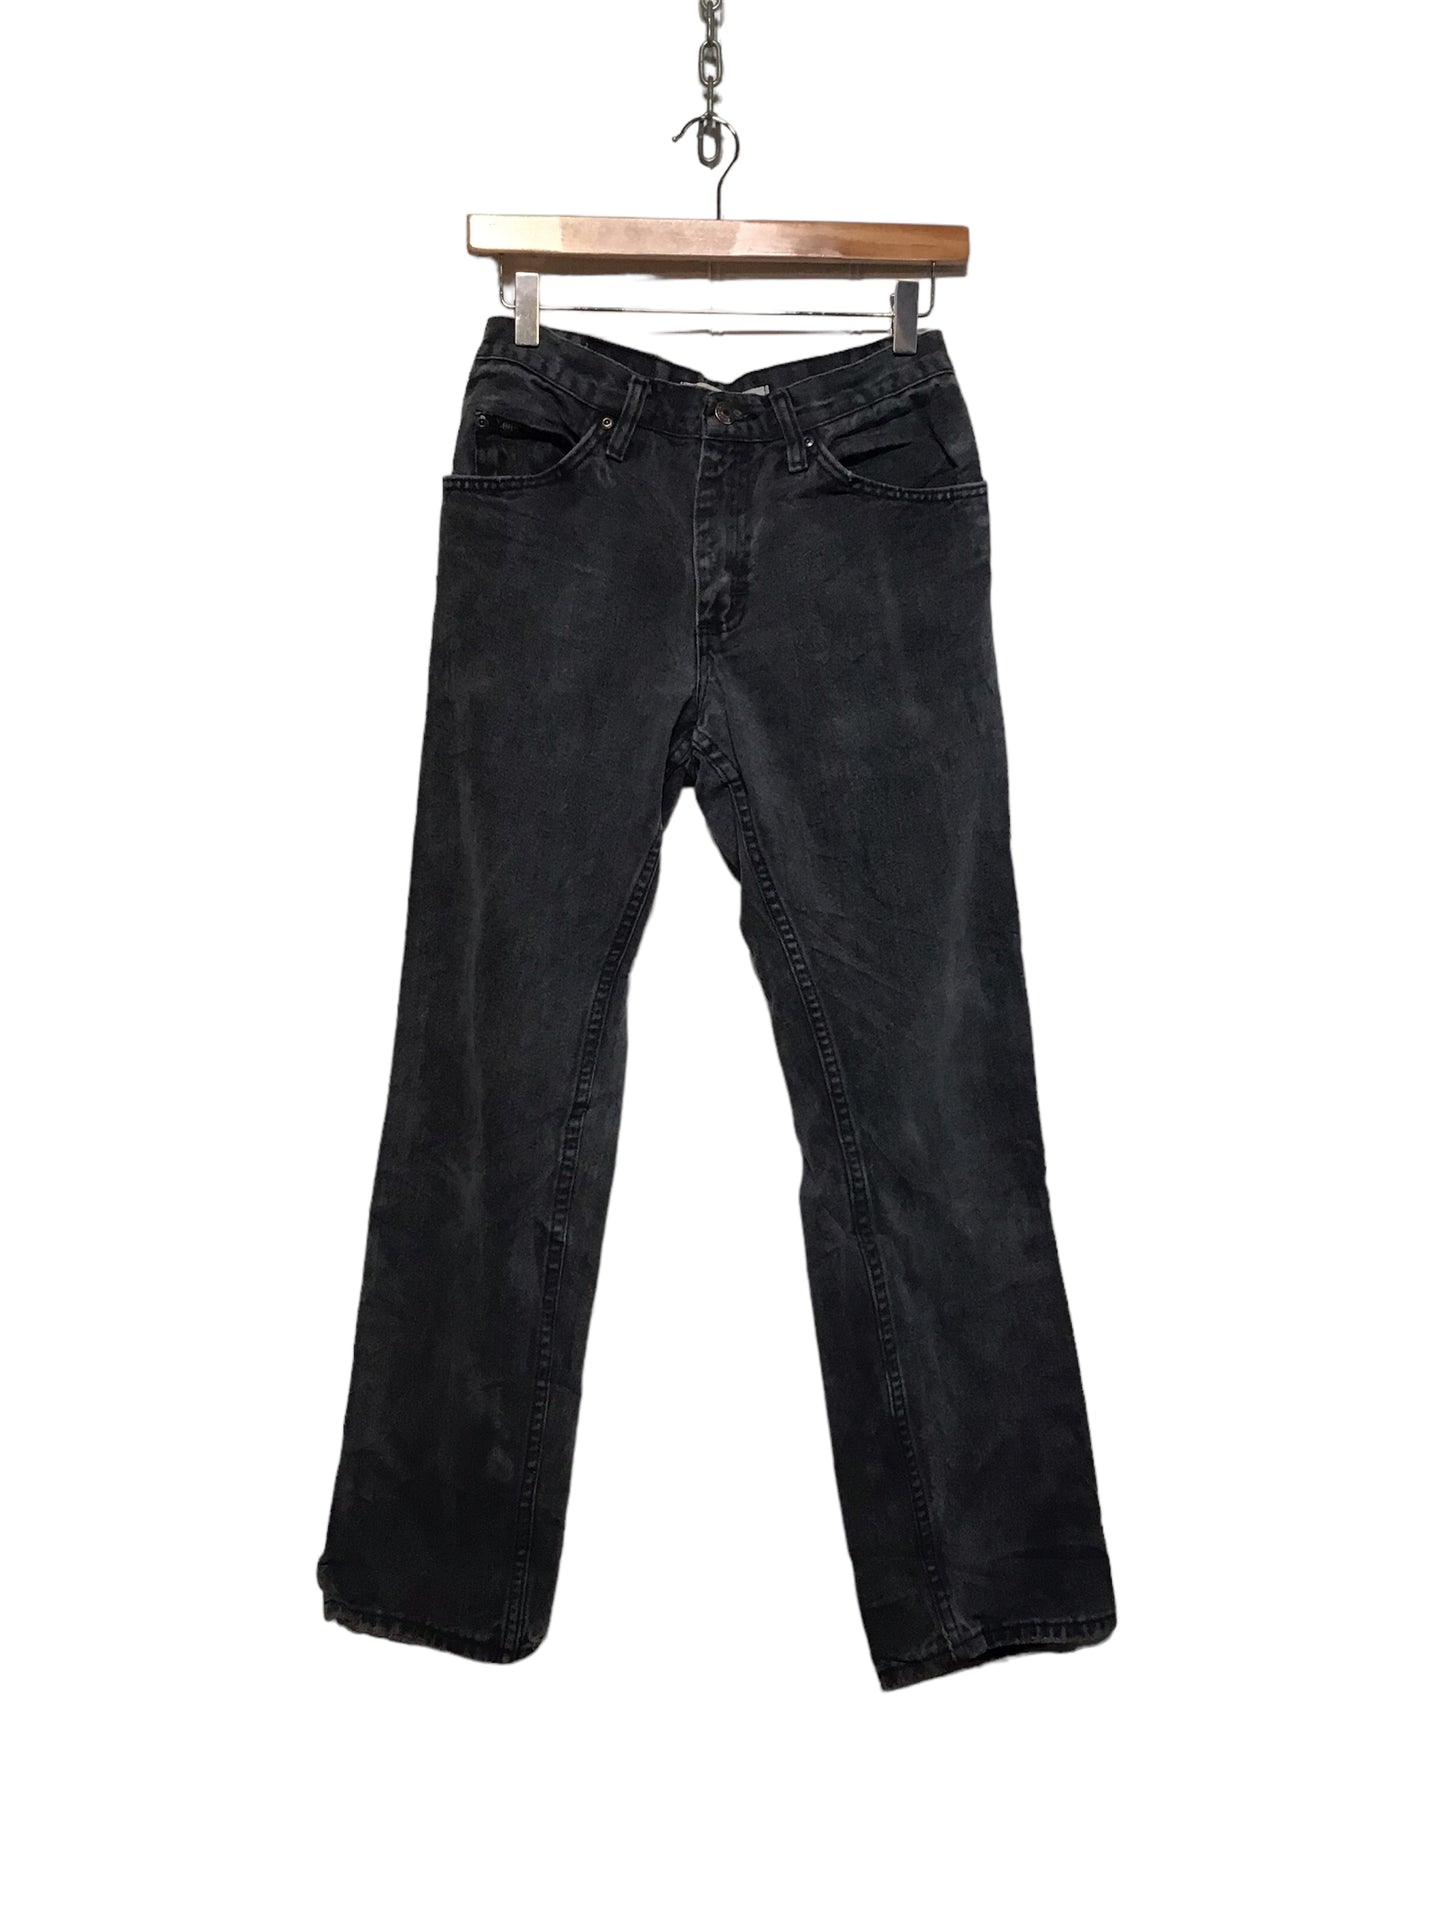 Lee Grey Jeans (30x30)